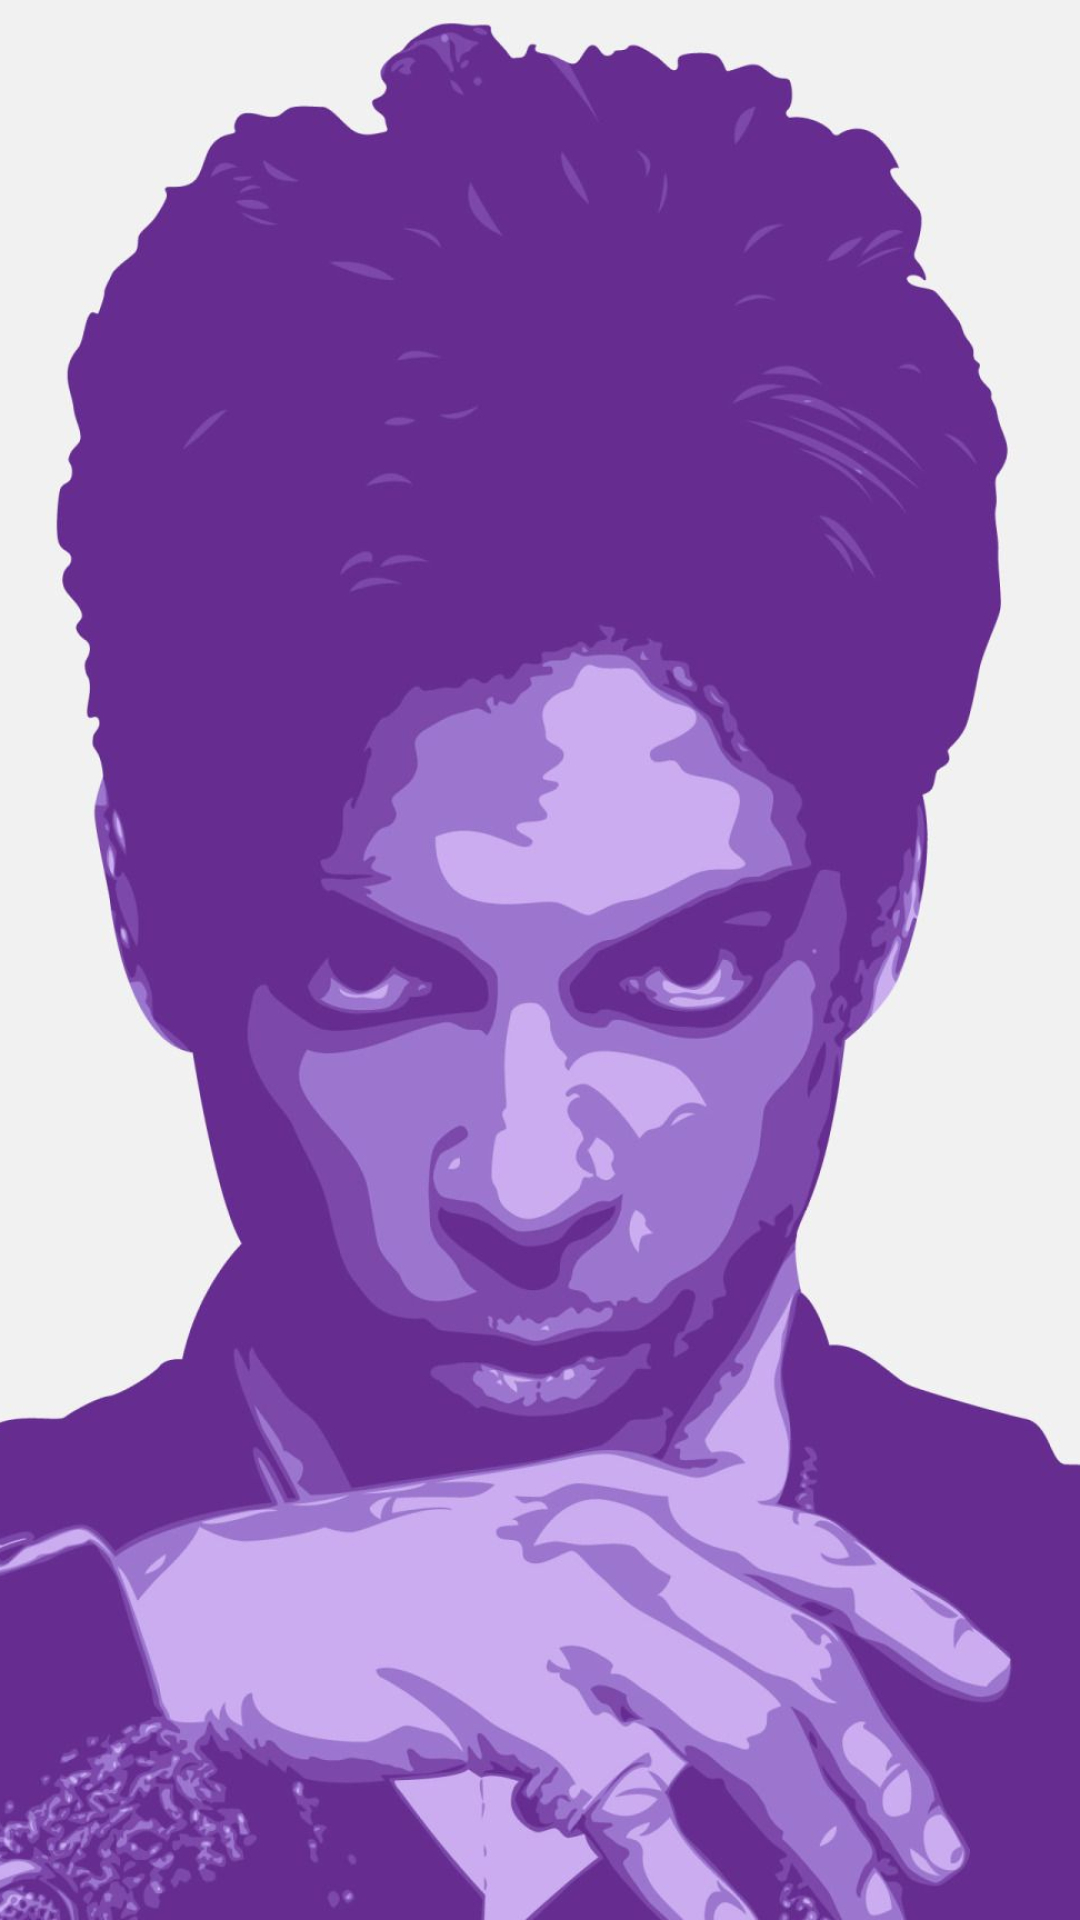 1080x1920 Wallpaper Dump | Prince art, The artist prince, Prince musicia